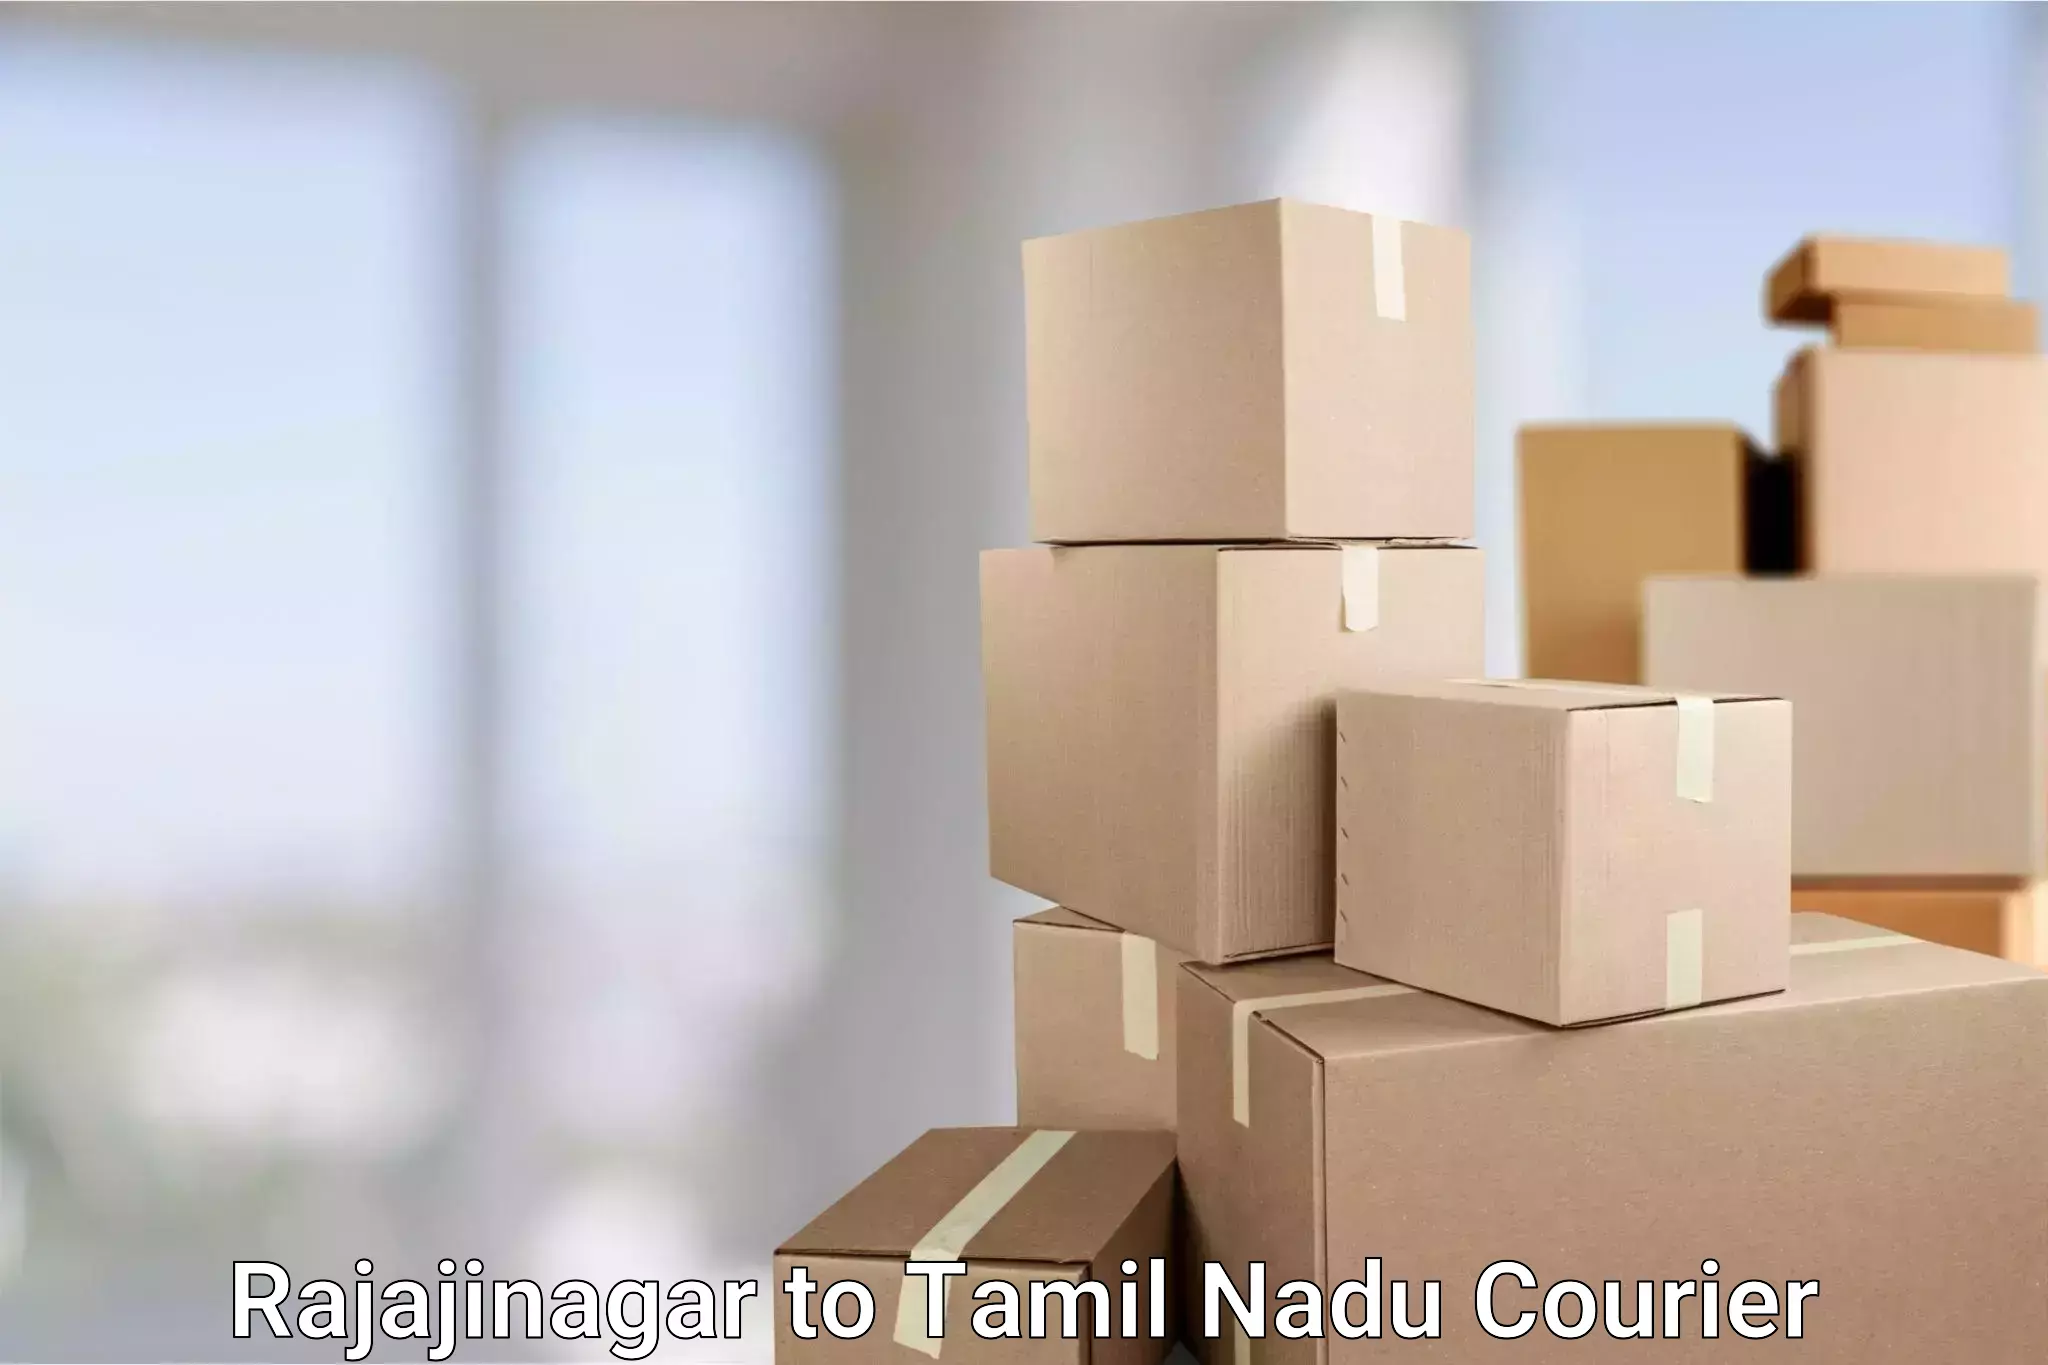 24-hour courier service Rajajinagar to Ennore Port Chennai